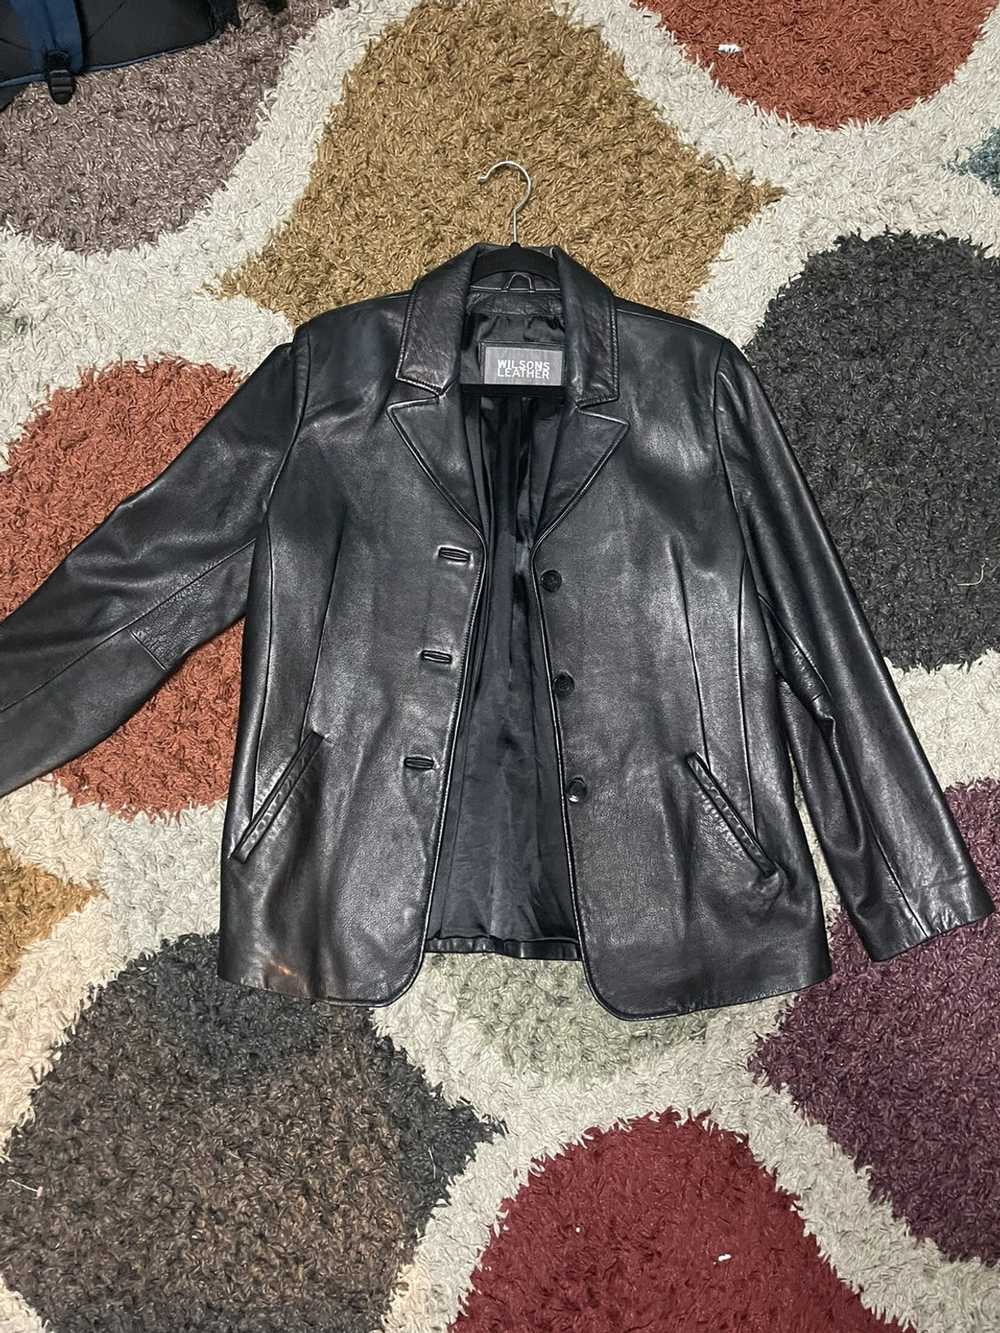 Wilsons Leather Vintage leather jacket - image 1